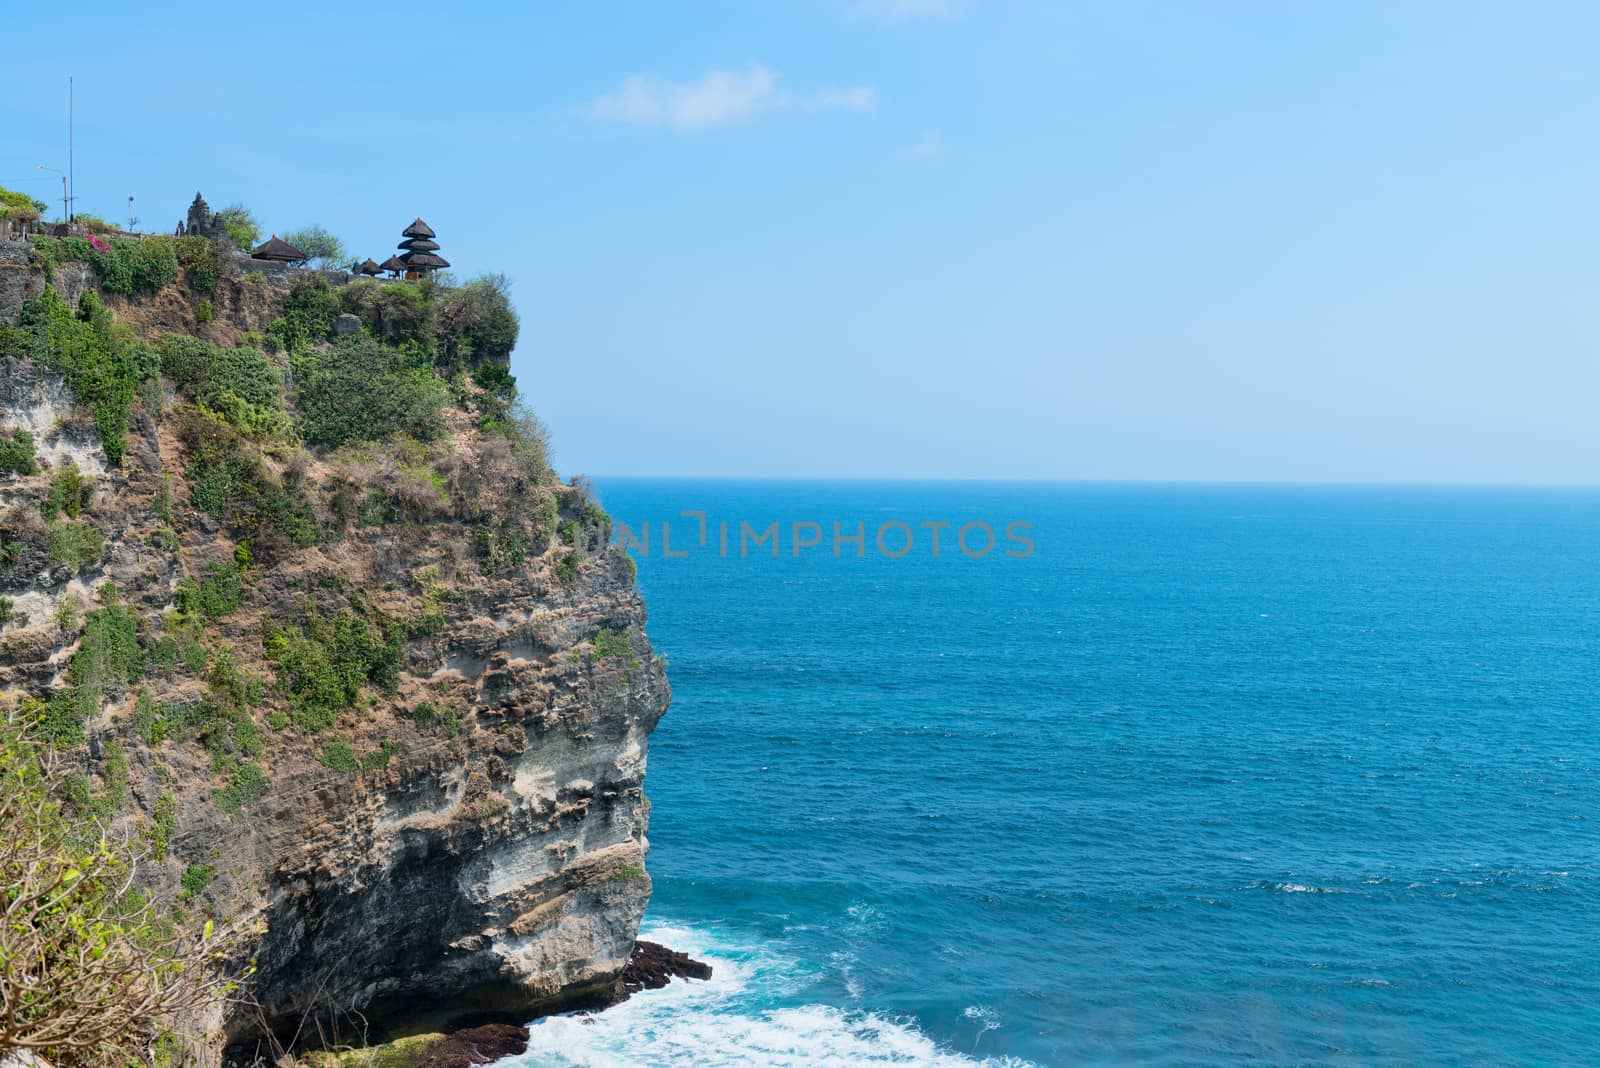 Pura Luhur Uluwatu Temple, Bali on high cliffs above blue tropical sea